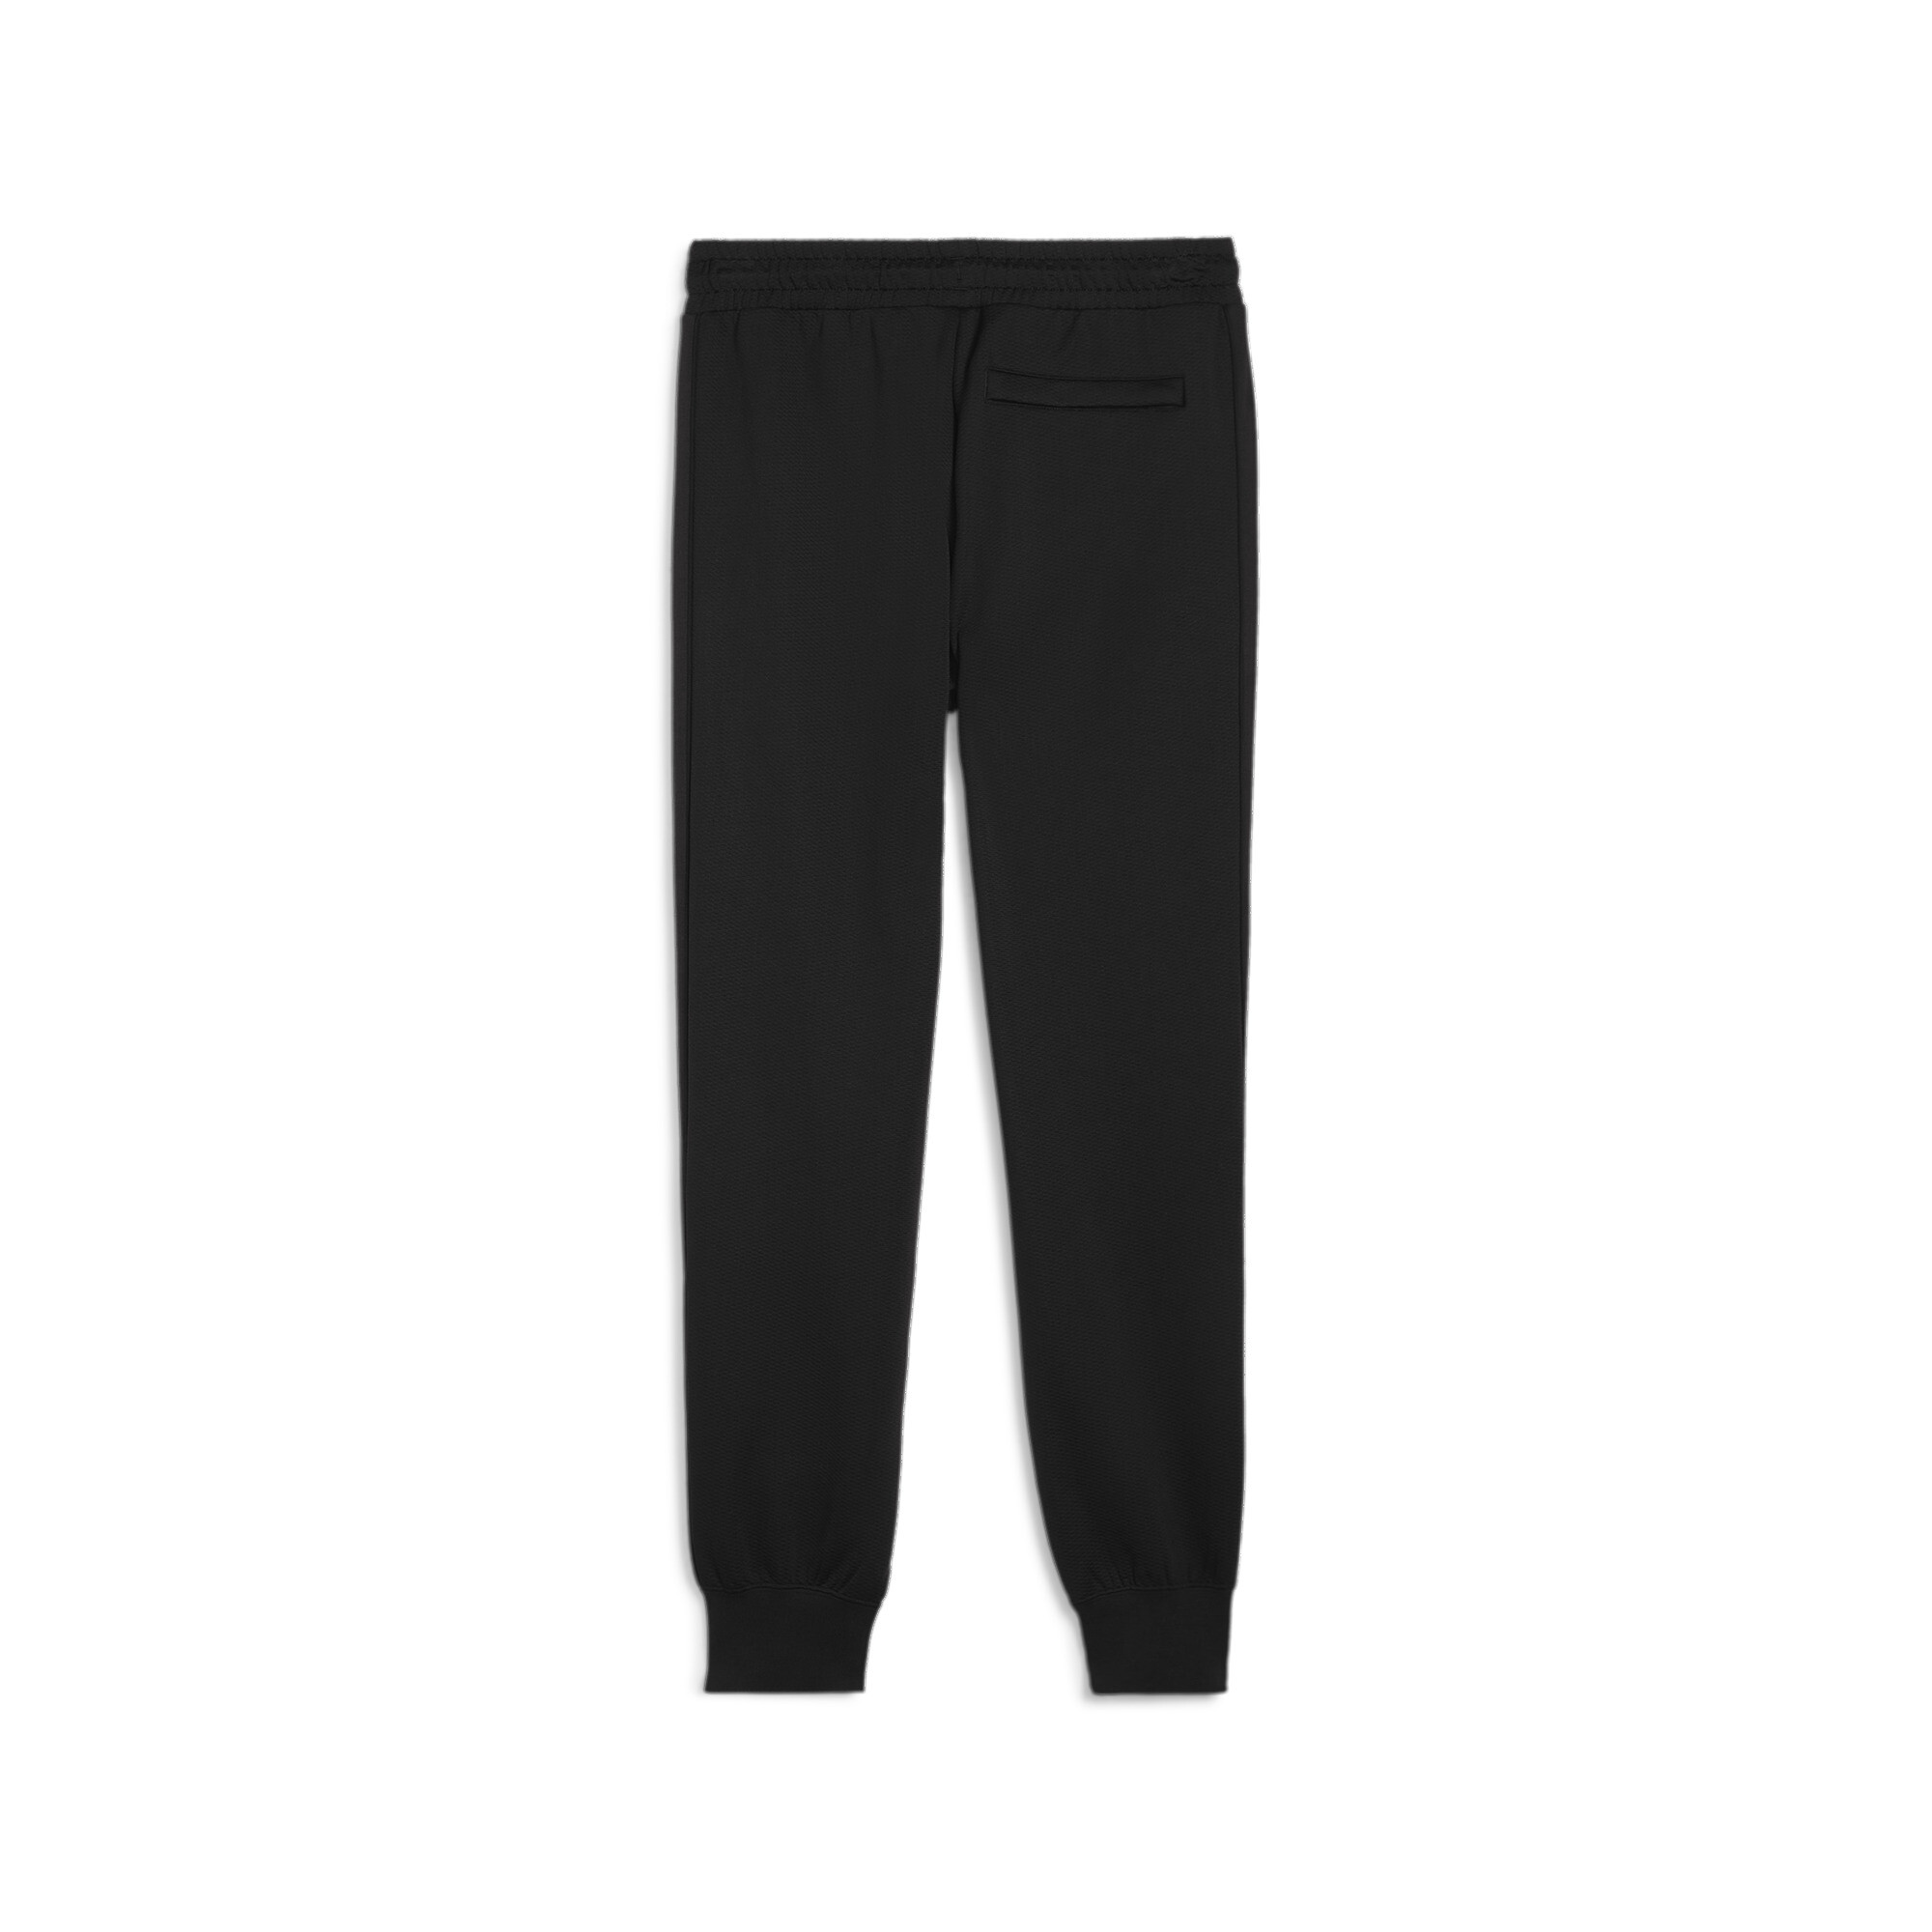 Men's PUMA T7 Track Pants In Black, Size Large